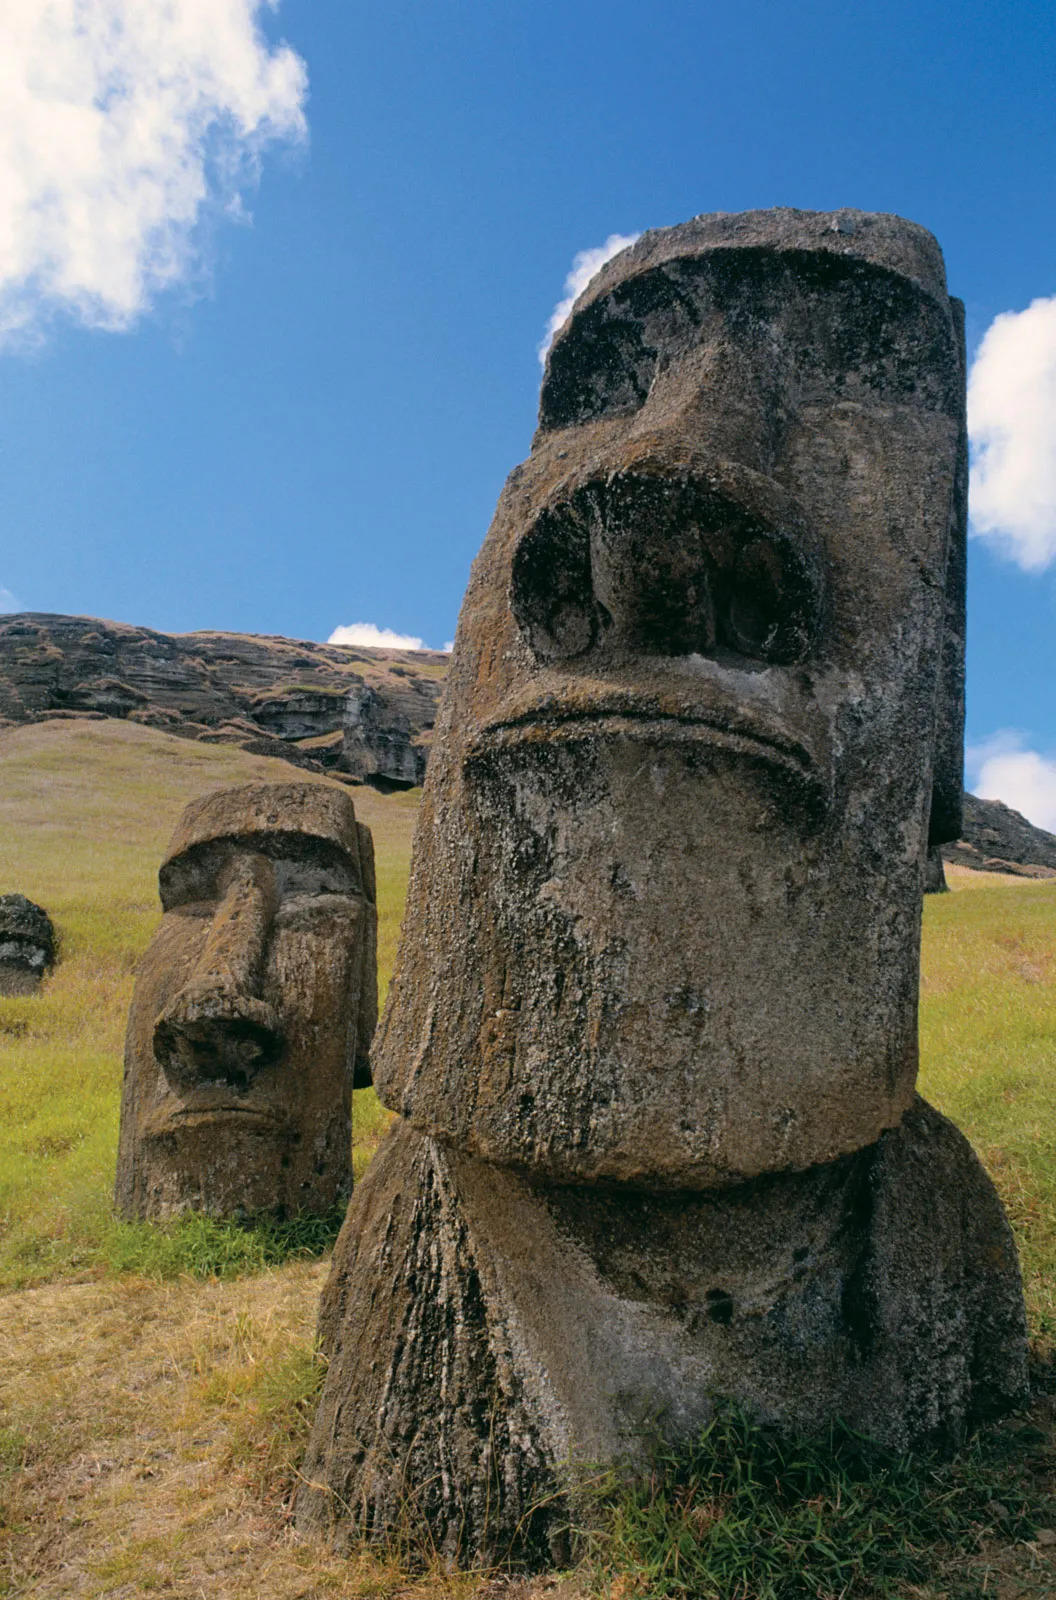 2. Easter Island